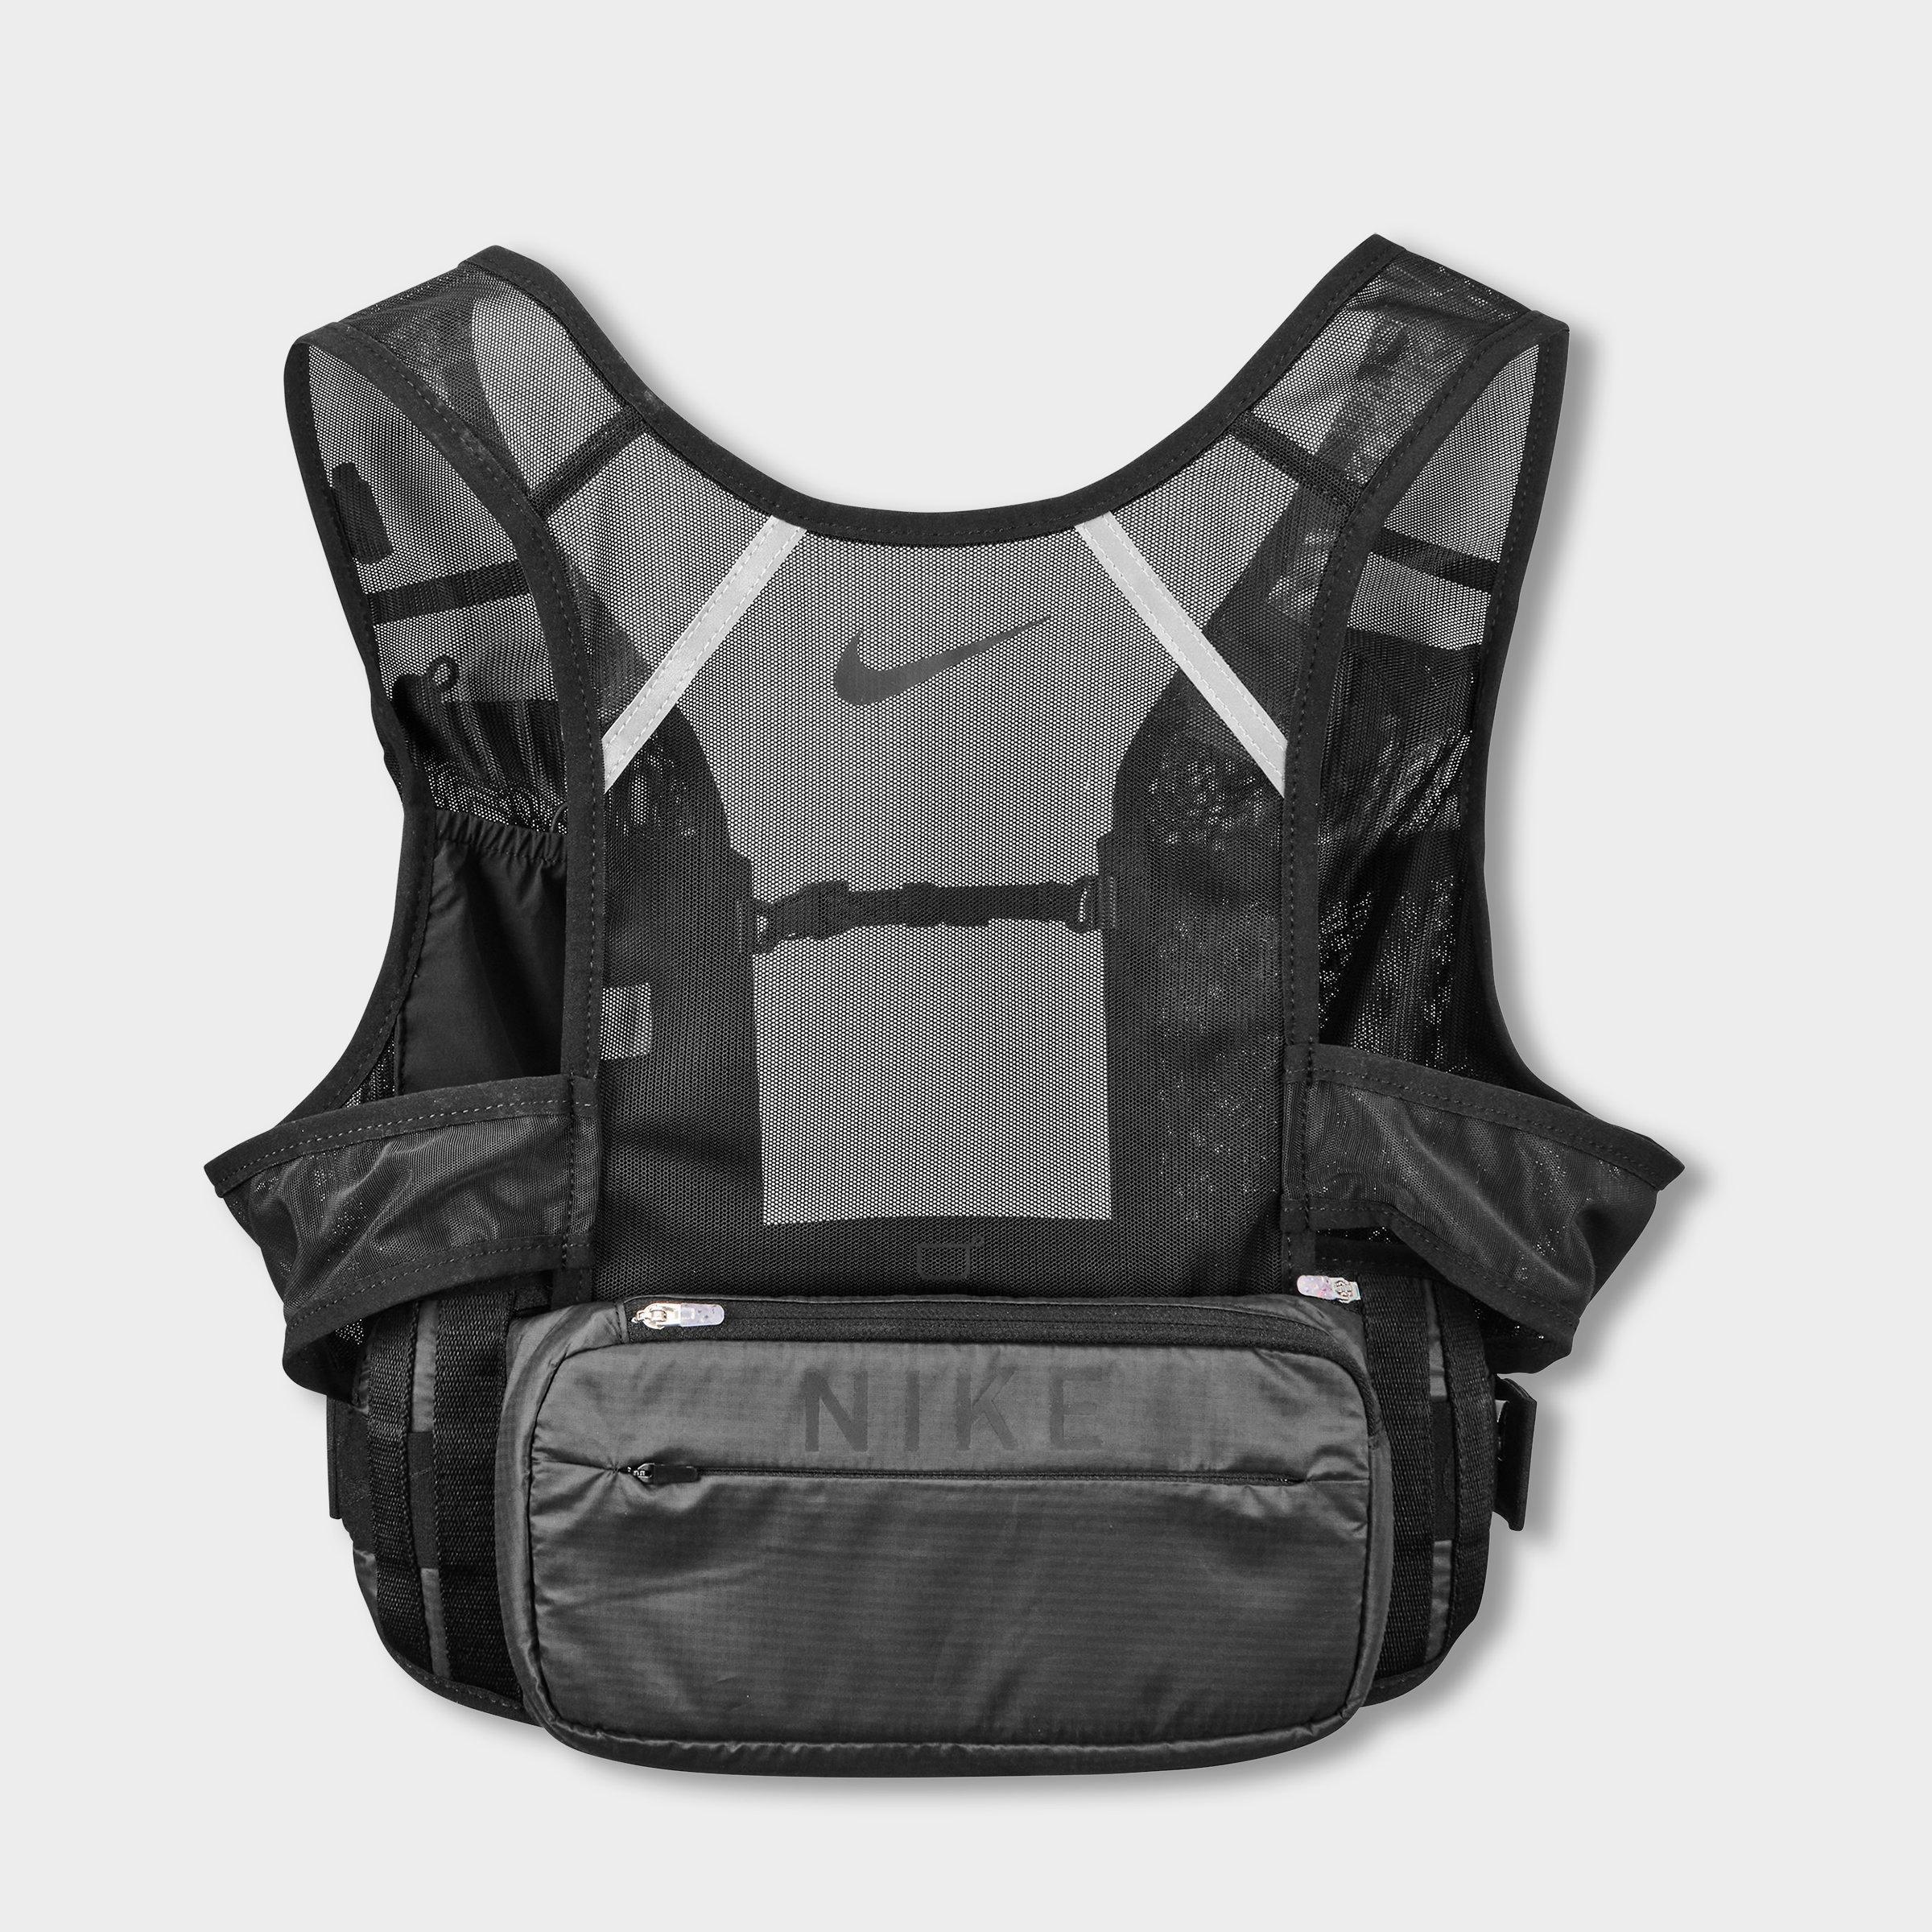 Nike Transform Packable Running Gilet 